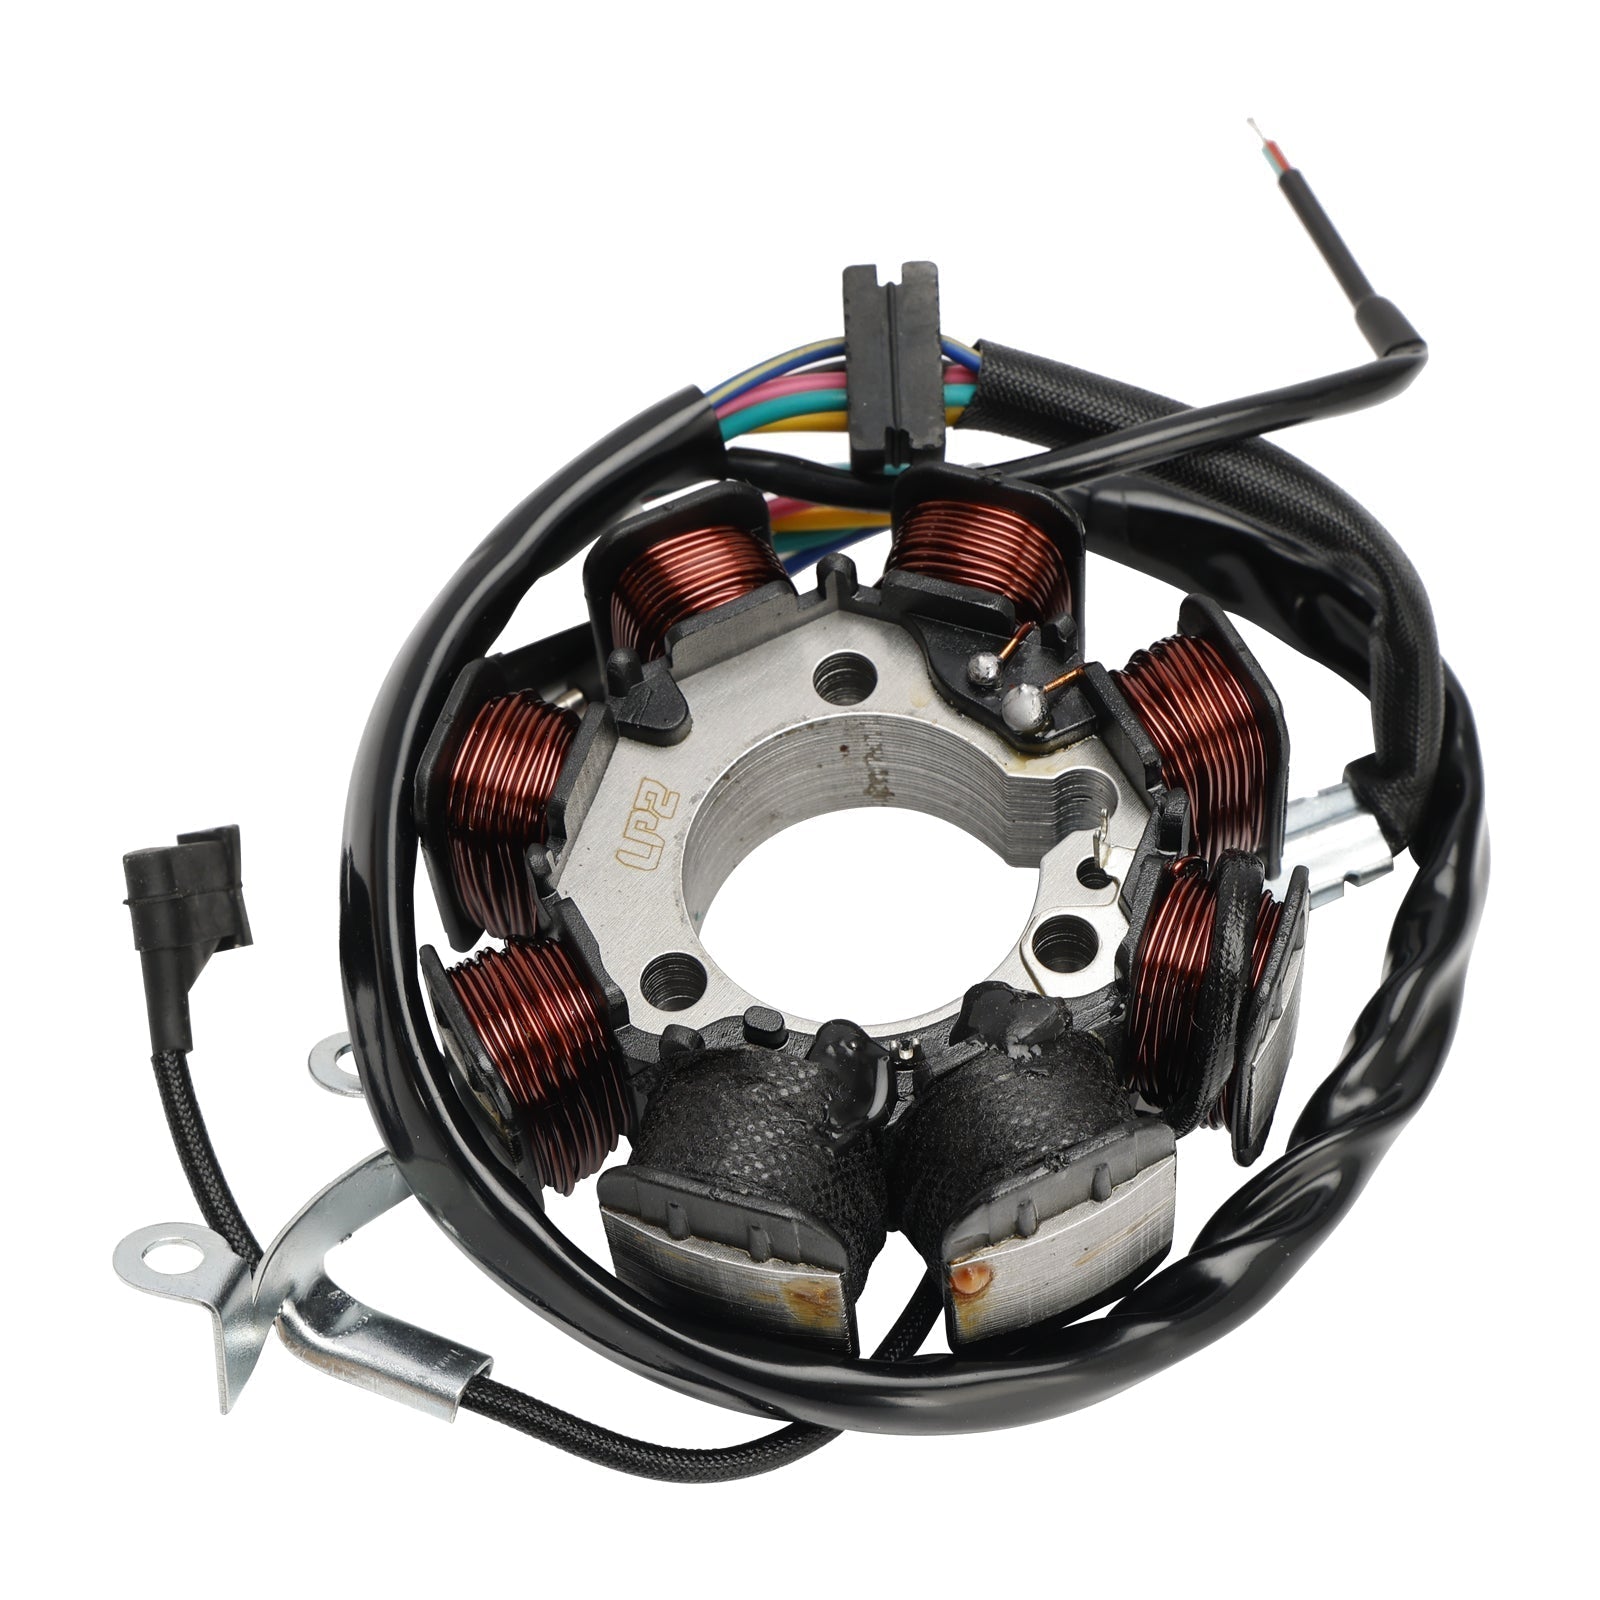 Honda CTX200 Bushlander 2002-2016 Estator de bobina magnética + regulador de voltaje + conjunto de juntas 31120-KY7-004